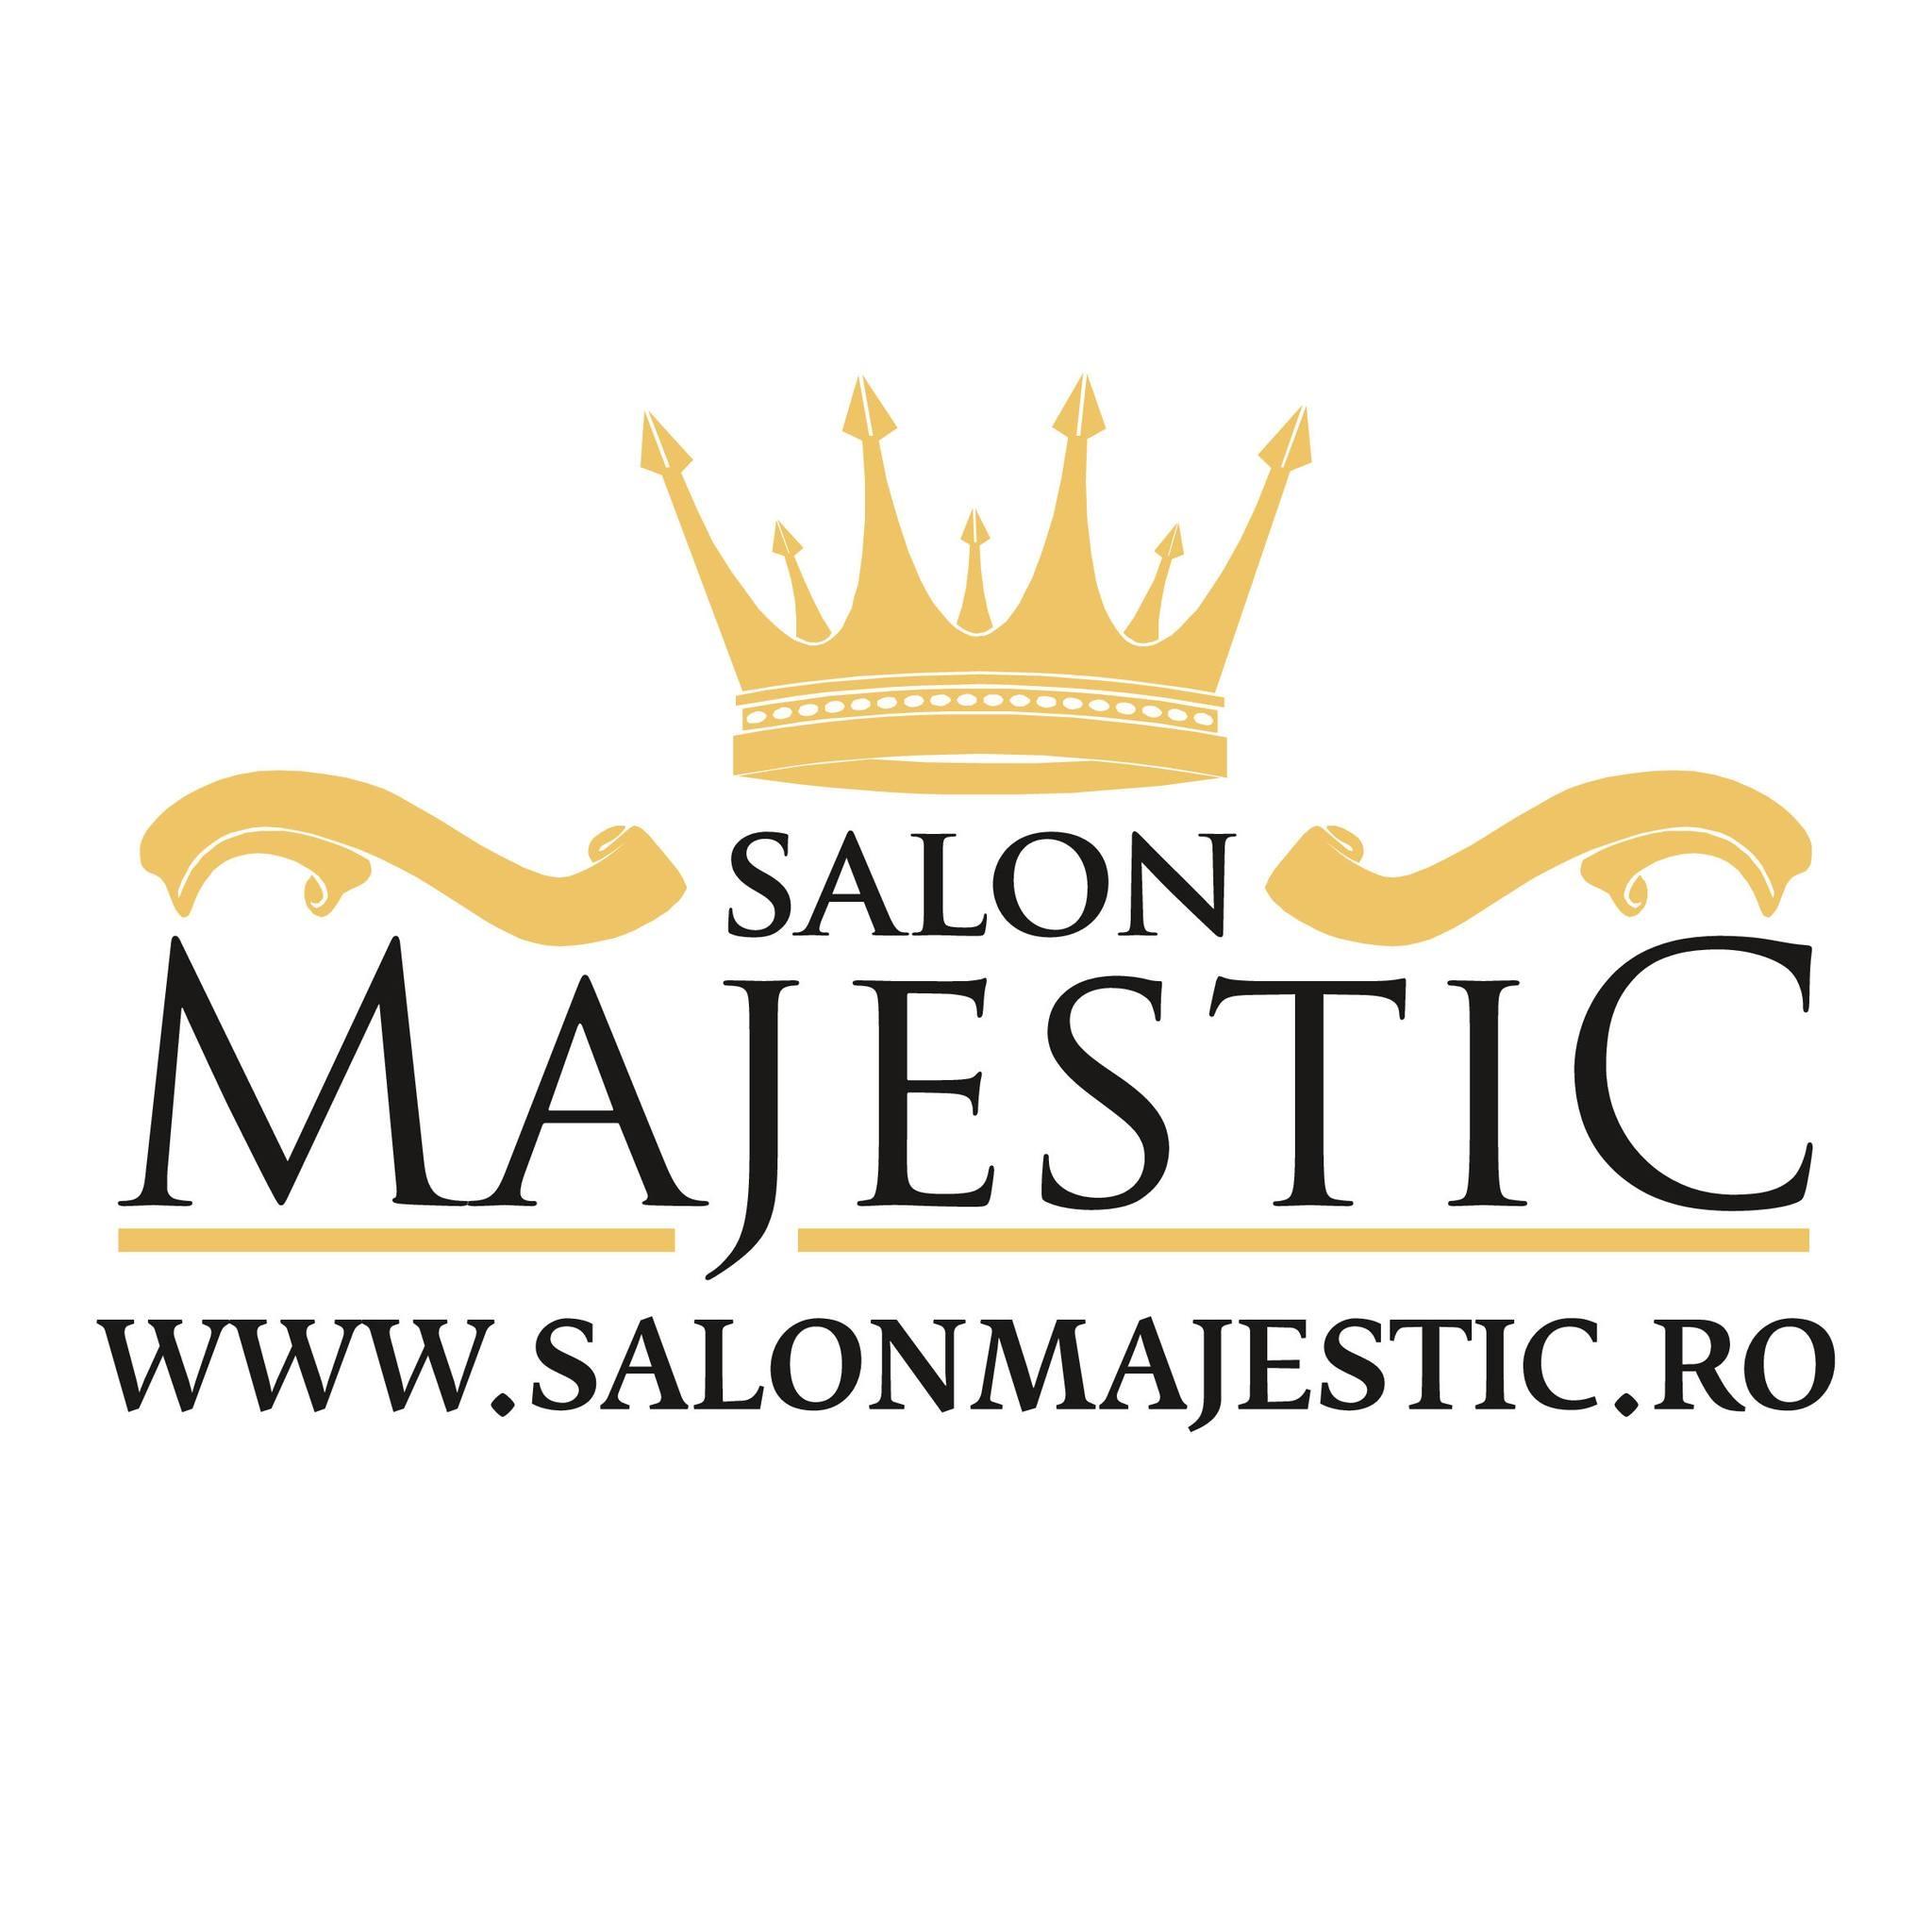 Salon Majestic